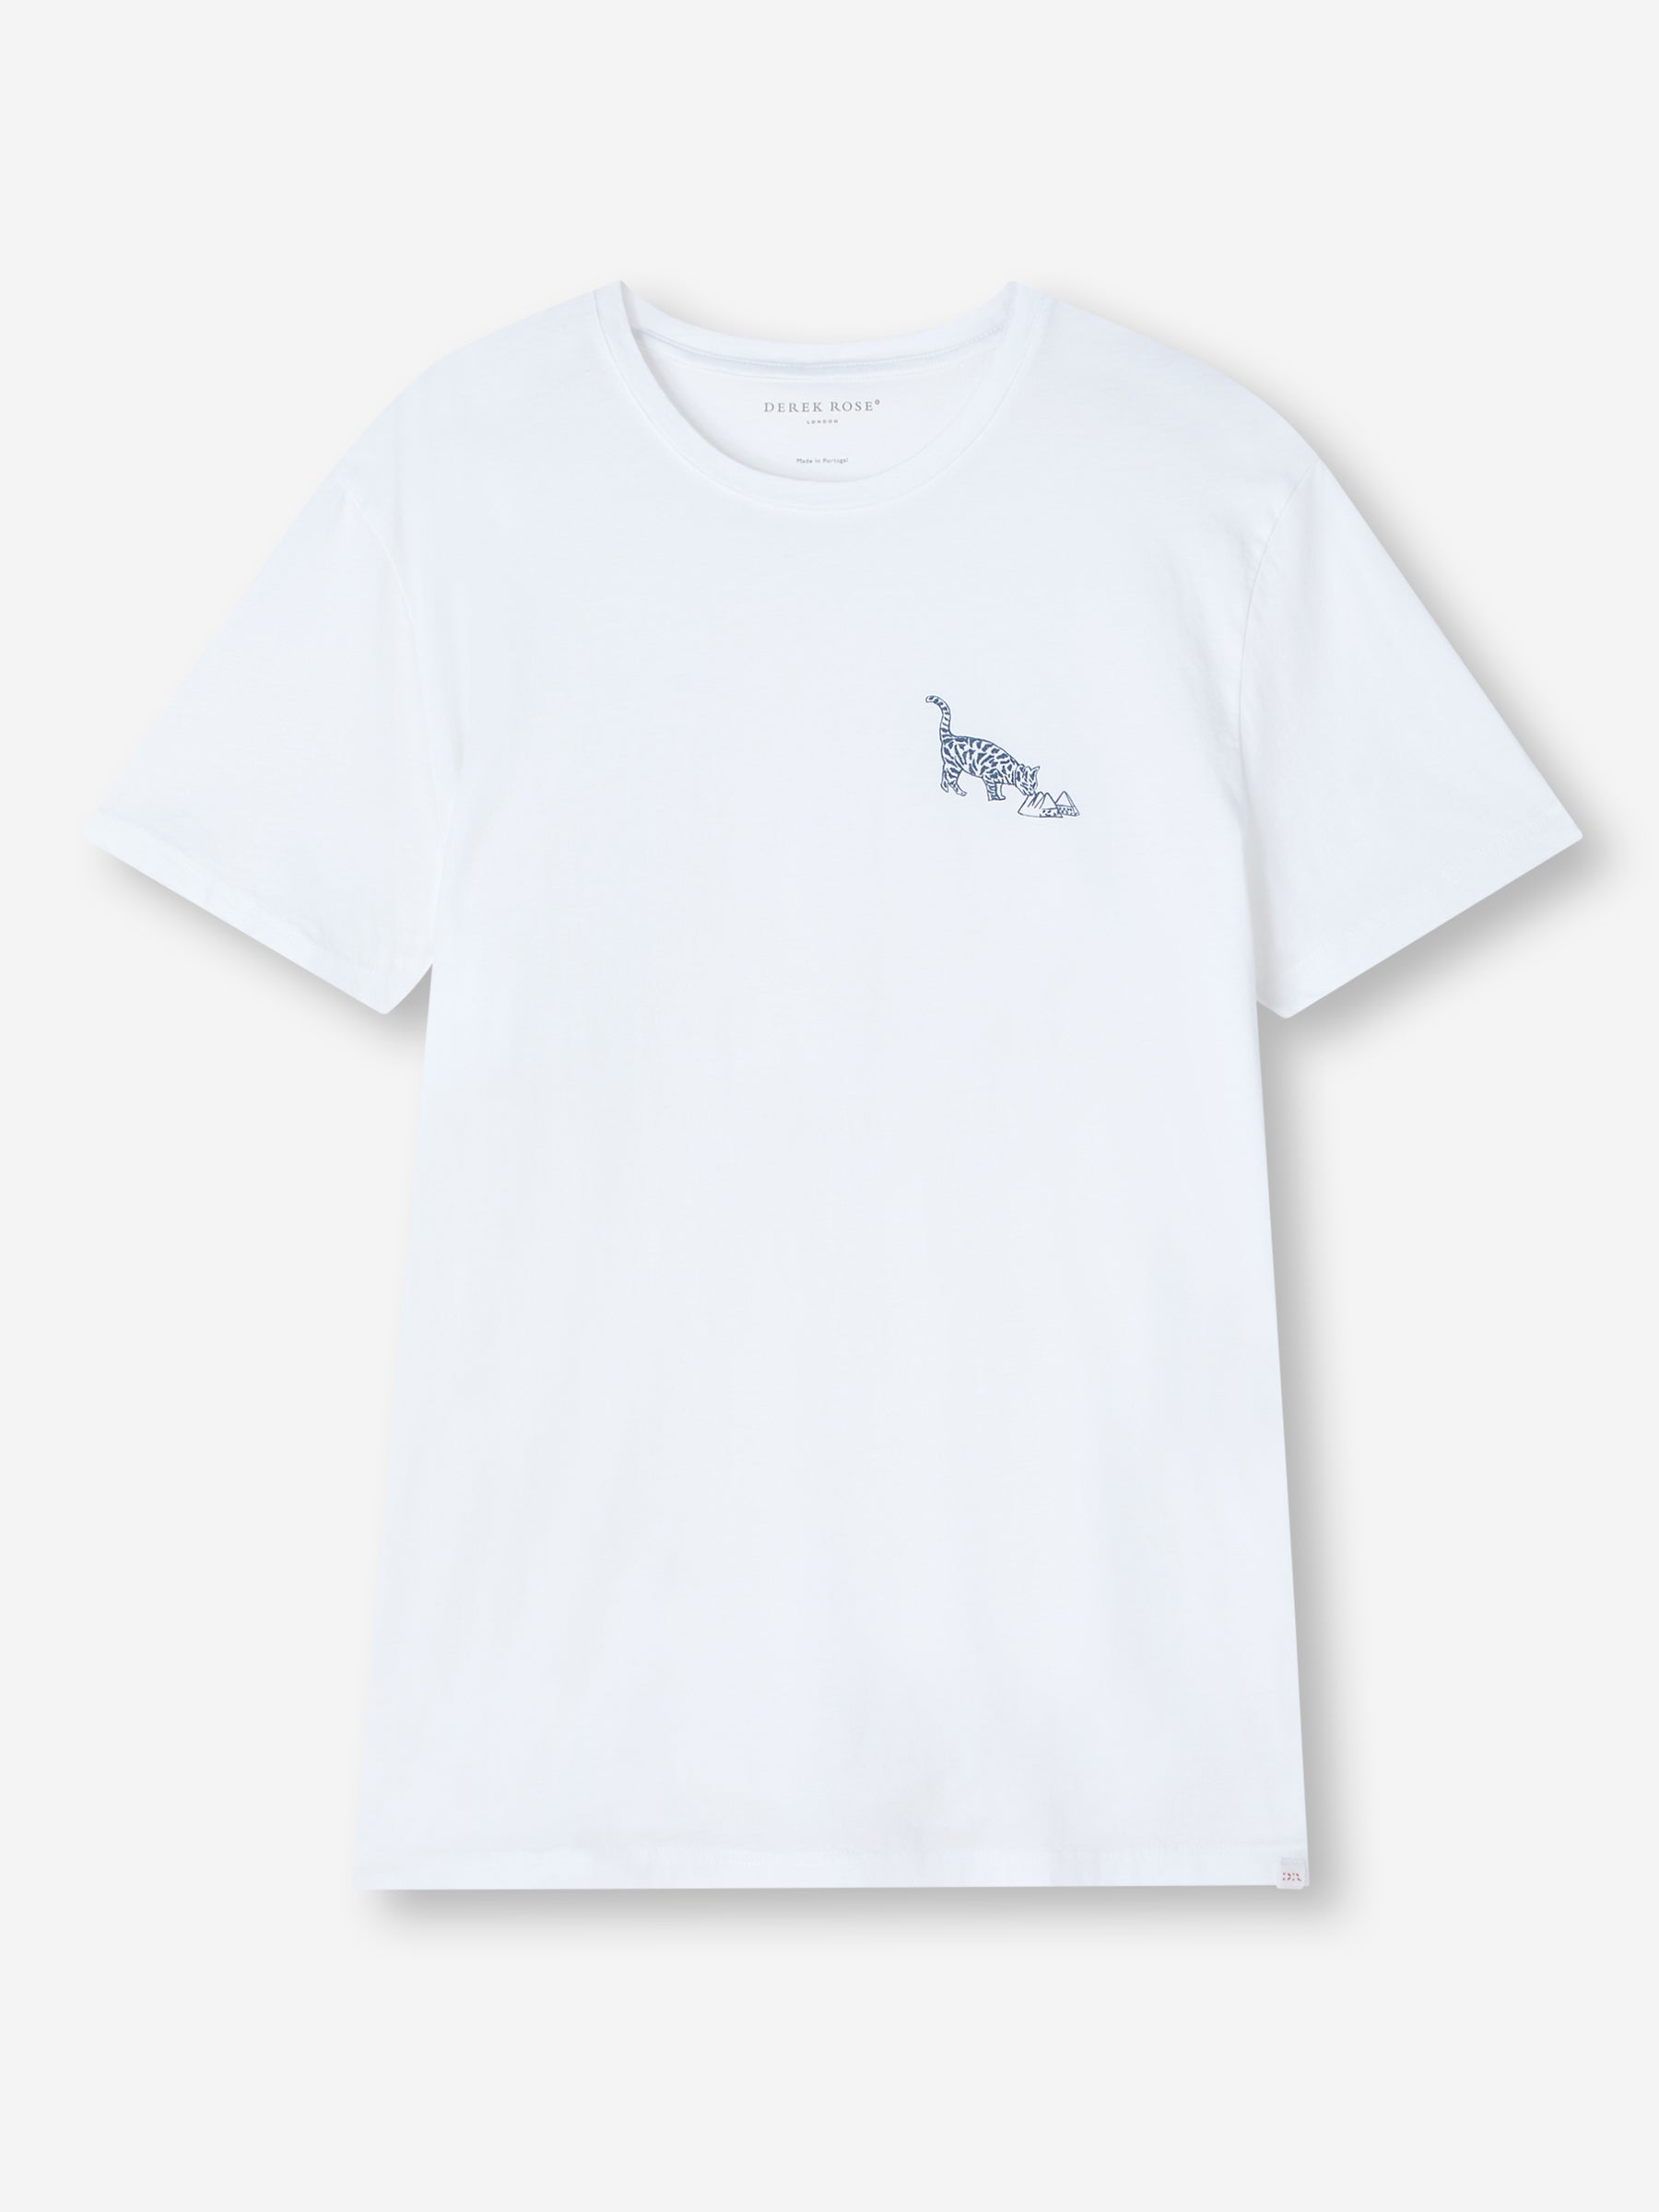 Men's T-Shirt Ripley 16 Pima Cotton White